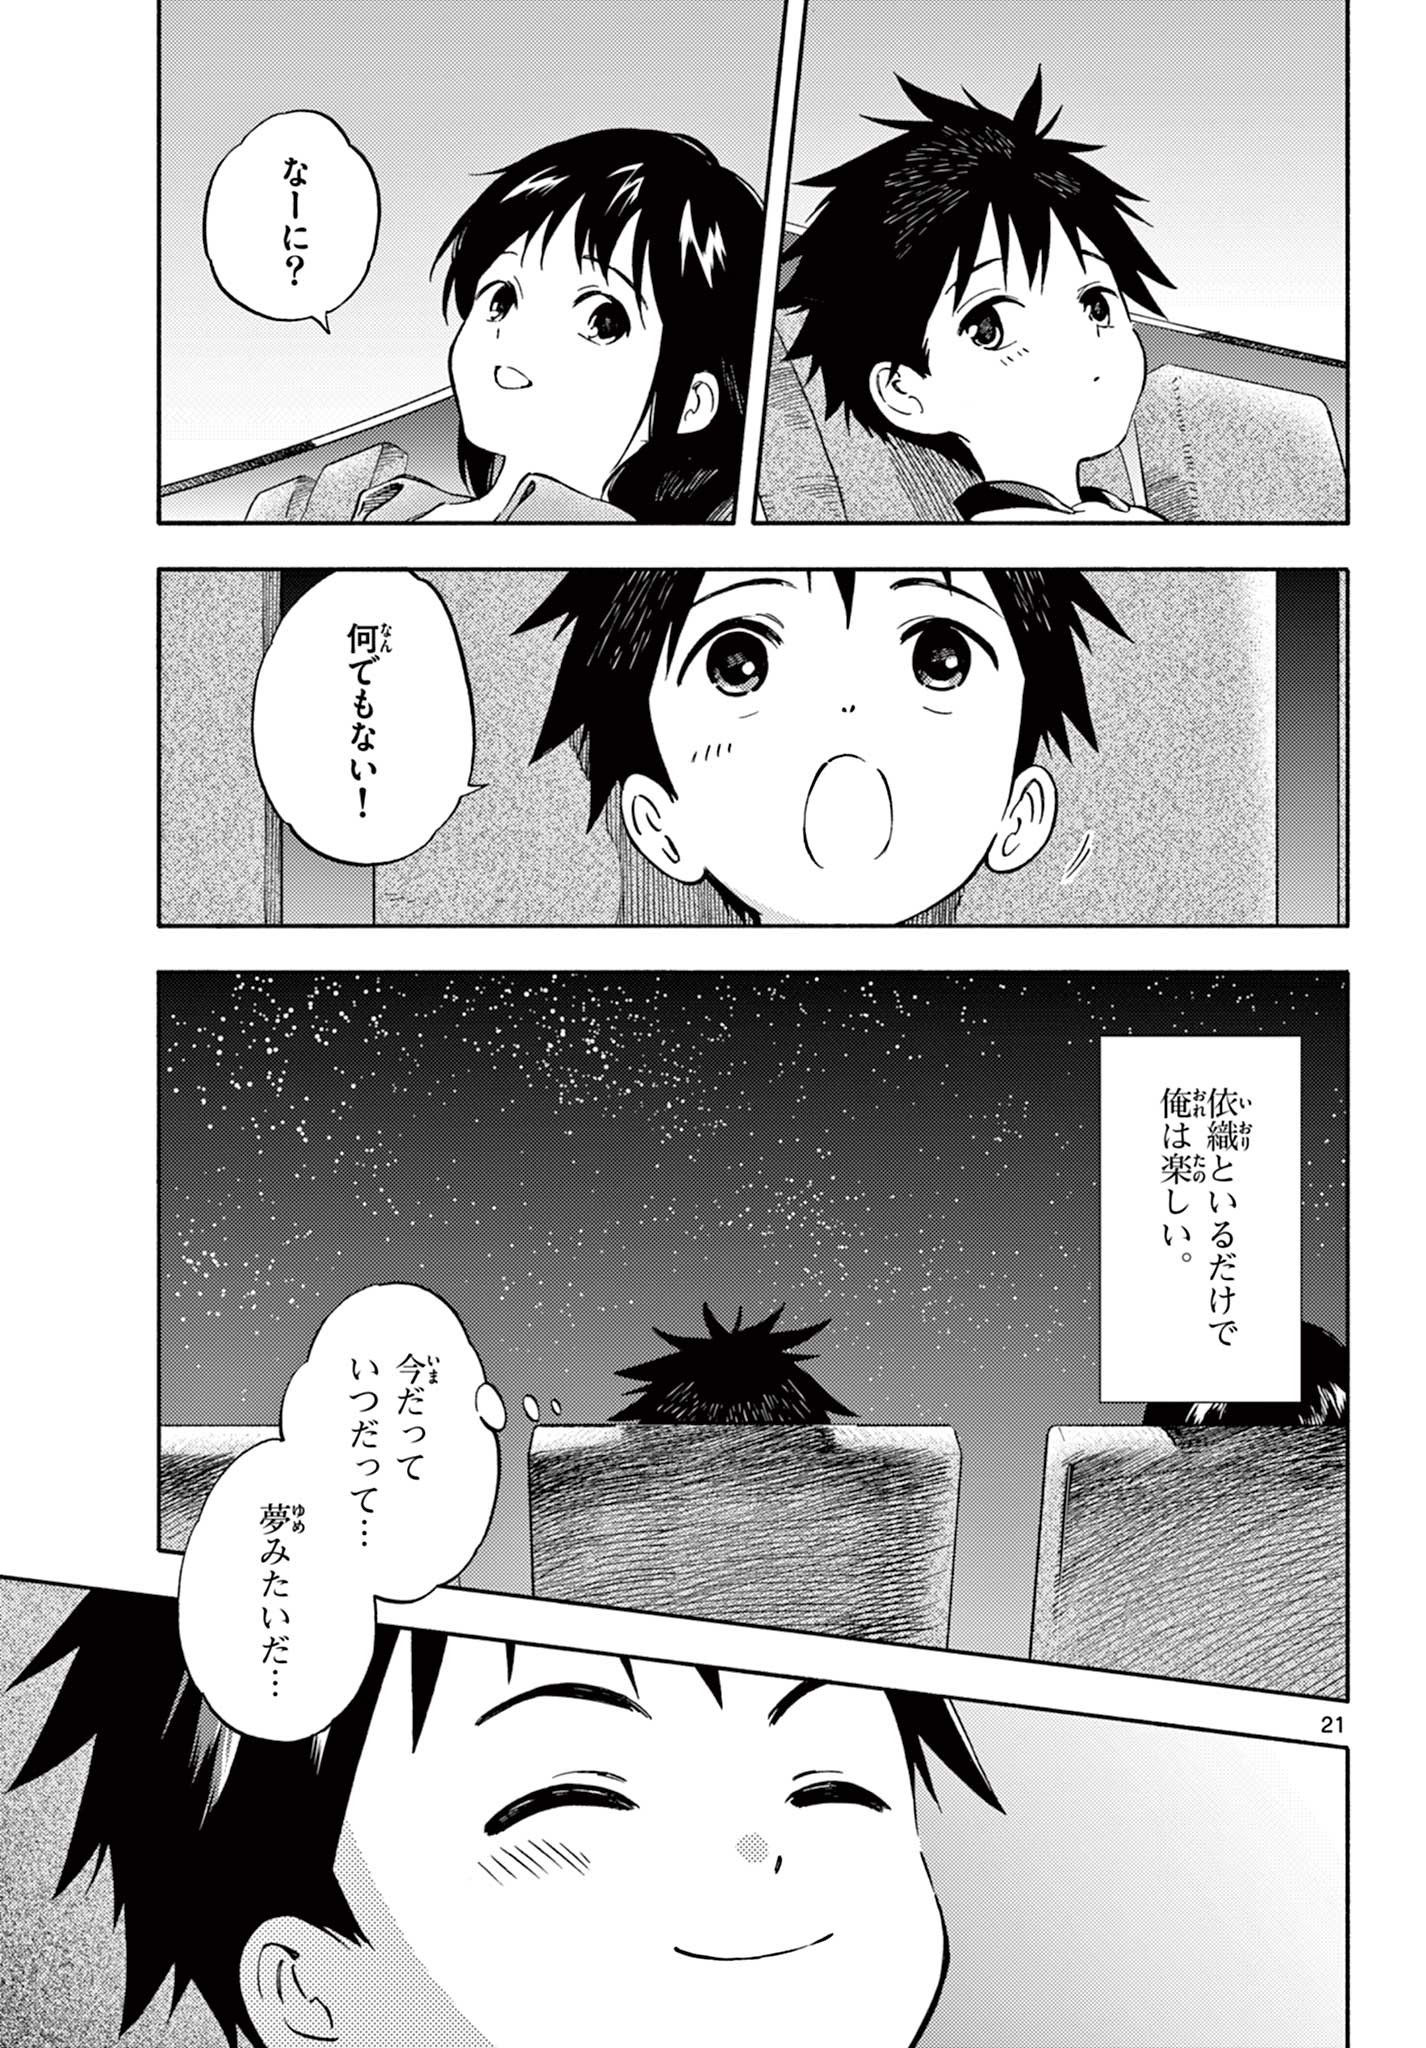 Nami no Shijima no Horizont - Chapter 15.2 - Page 6